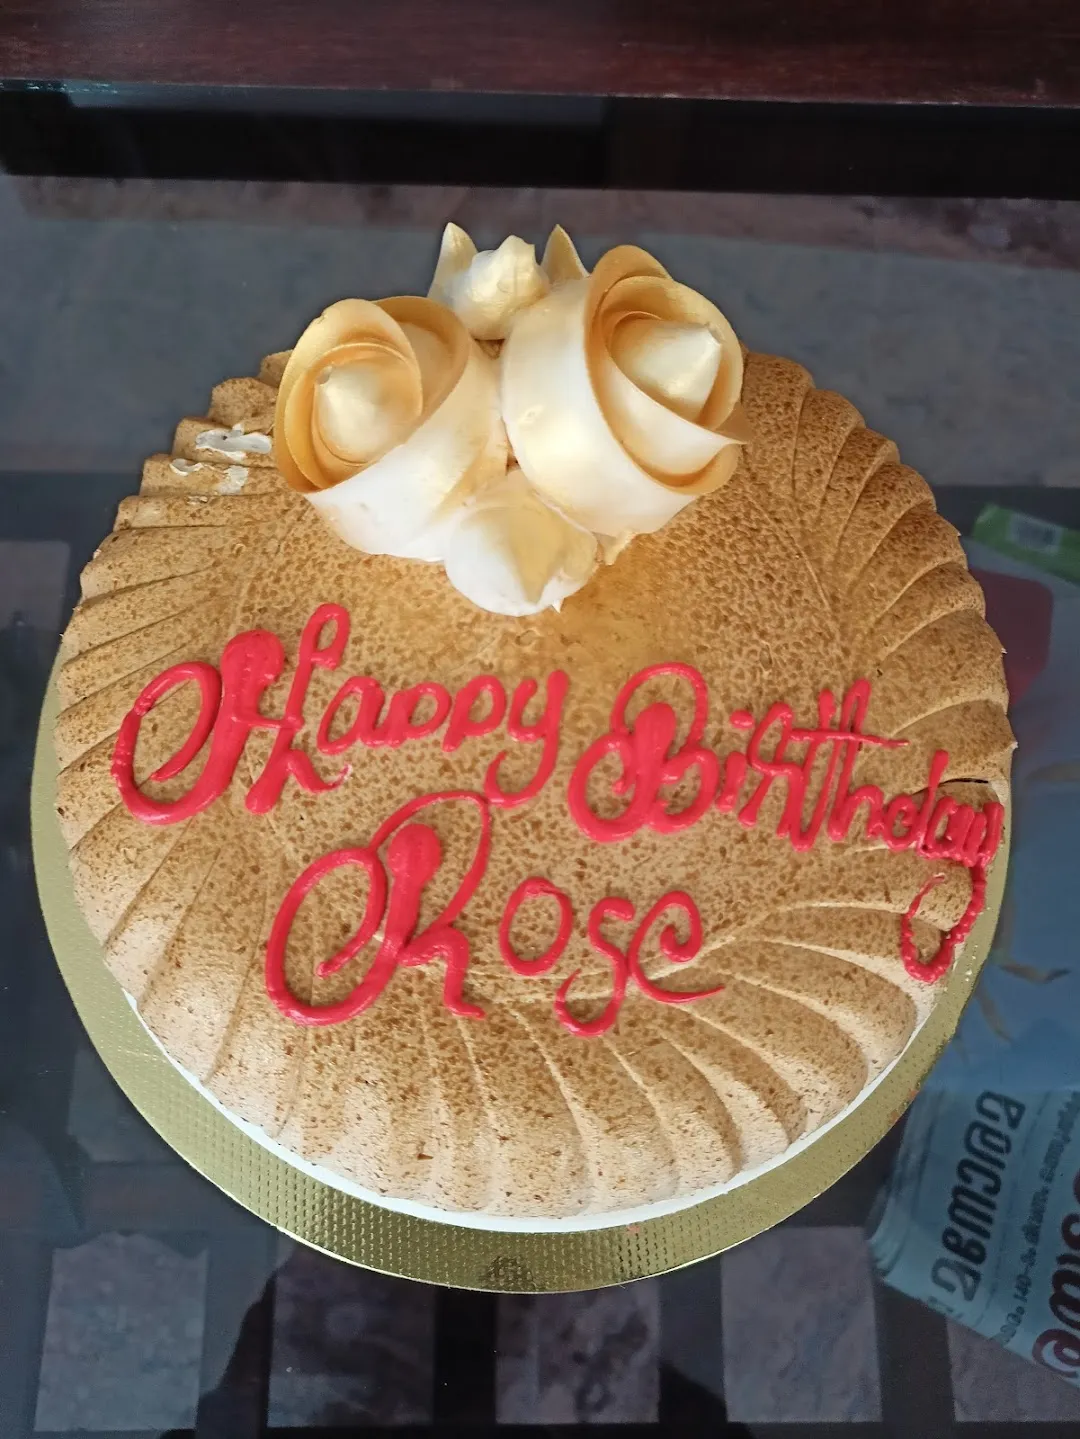 De Cake World ADOOR – Restaurant in Kerala, reviews and menu – Nicelocal